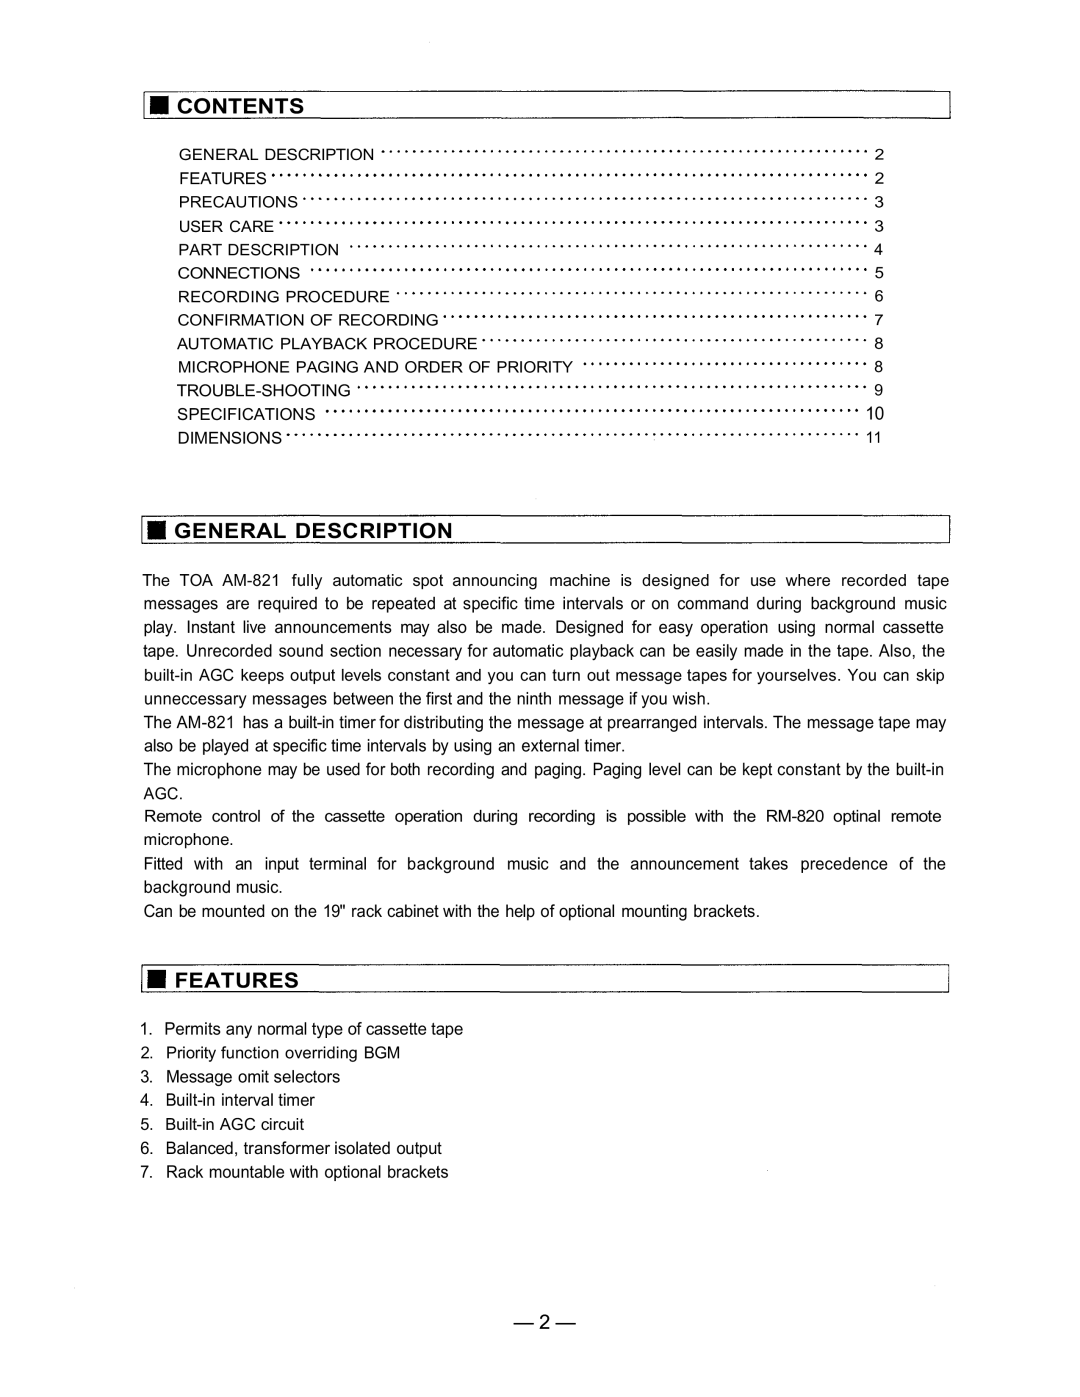 TOA Electronics AM-821 instruction manual Contents, General Description, Features 